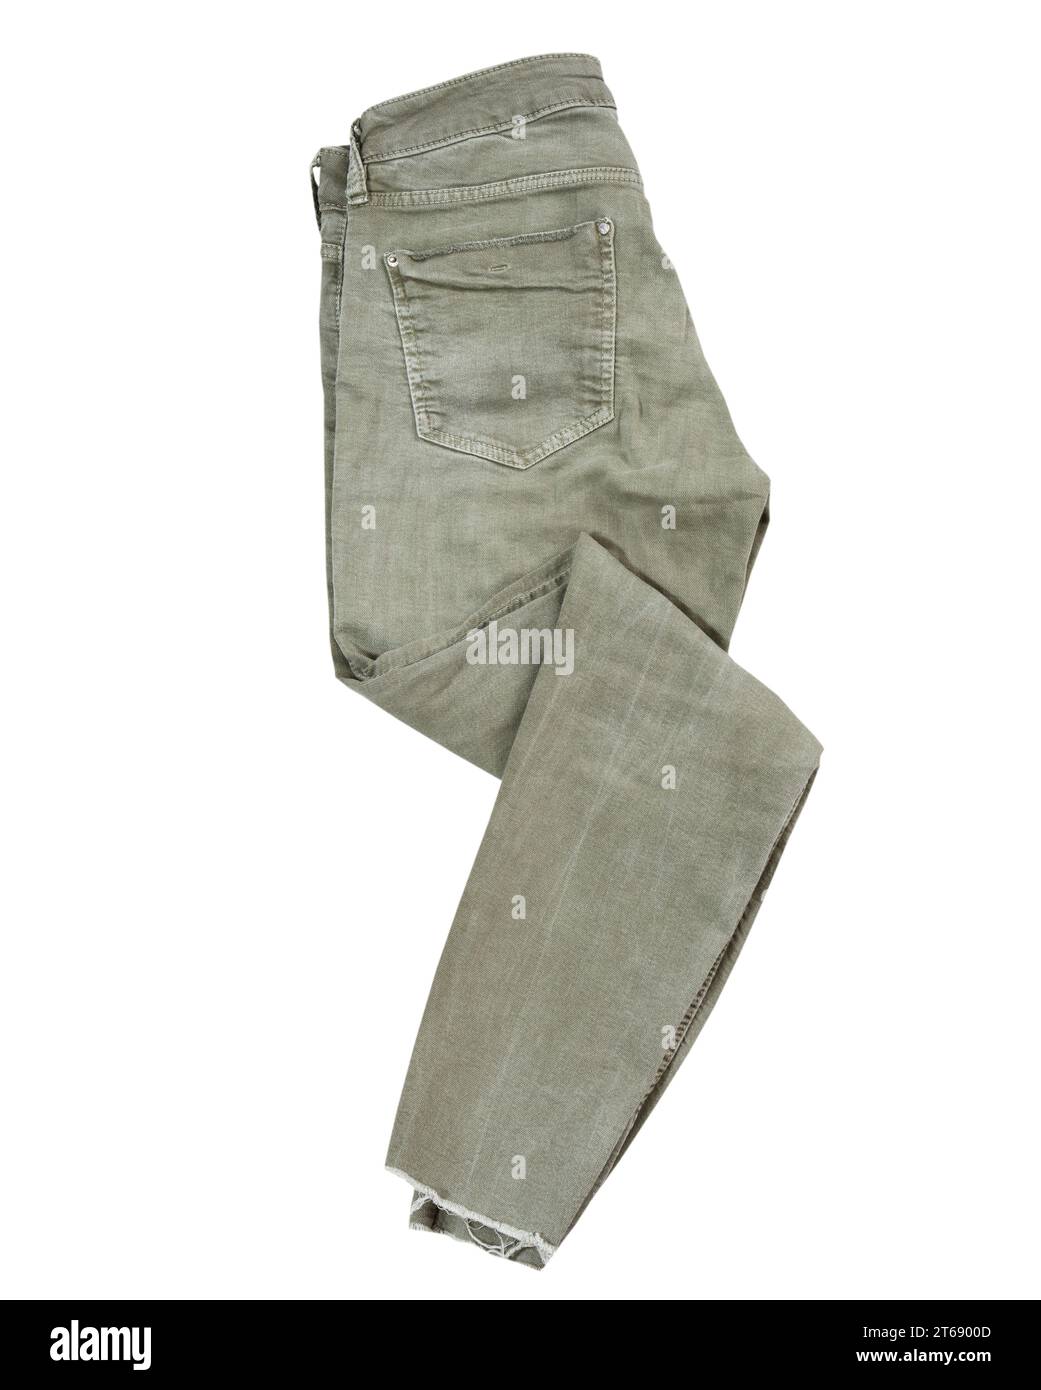 Buy KUNDAN Men's Poly-Viscose Dark Brown, Navy Blue & Khaki Colour Formal  Trousers (Pack of 3) at Amazon.in